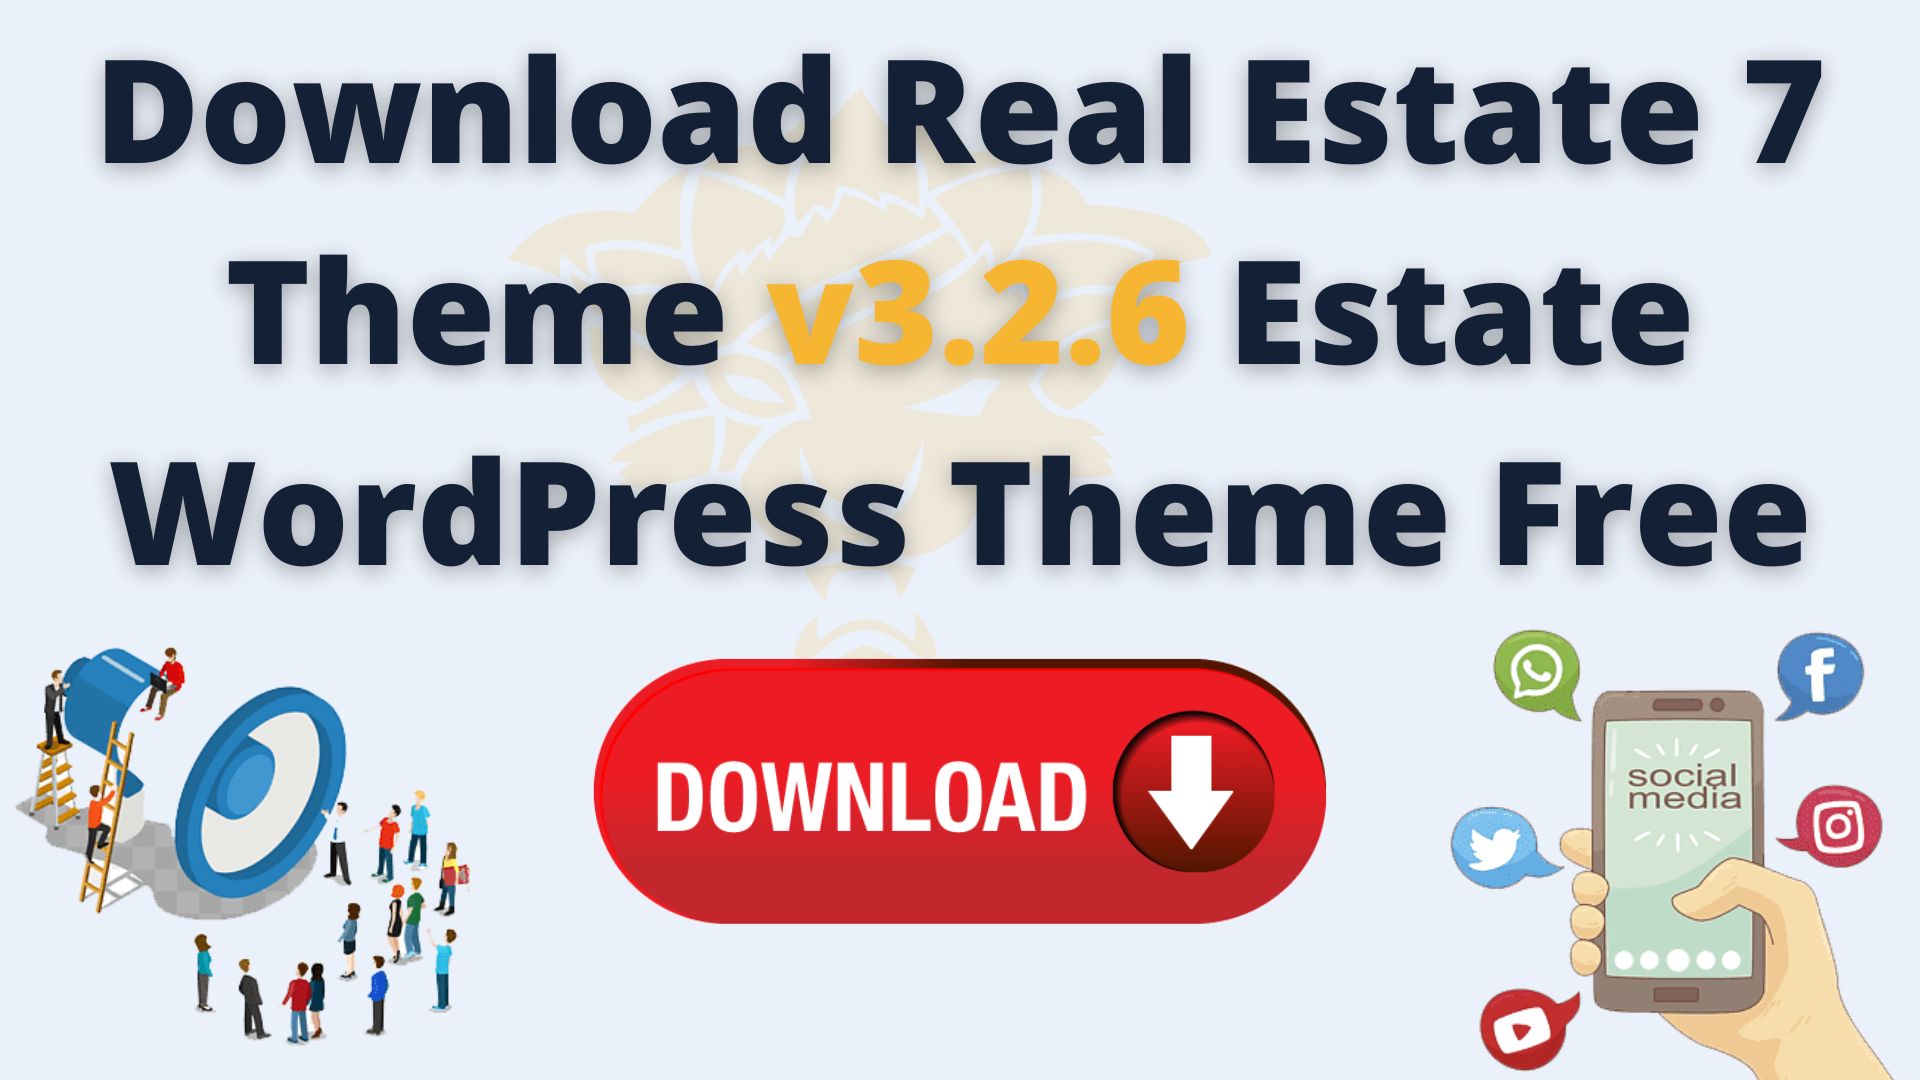 Download Real Estate 7 Theme V3.2.6 Estate Wordpress Theme Free